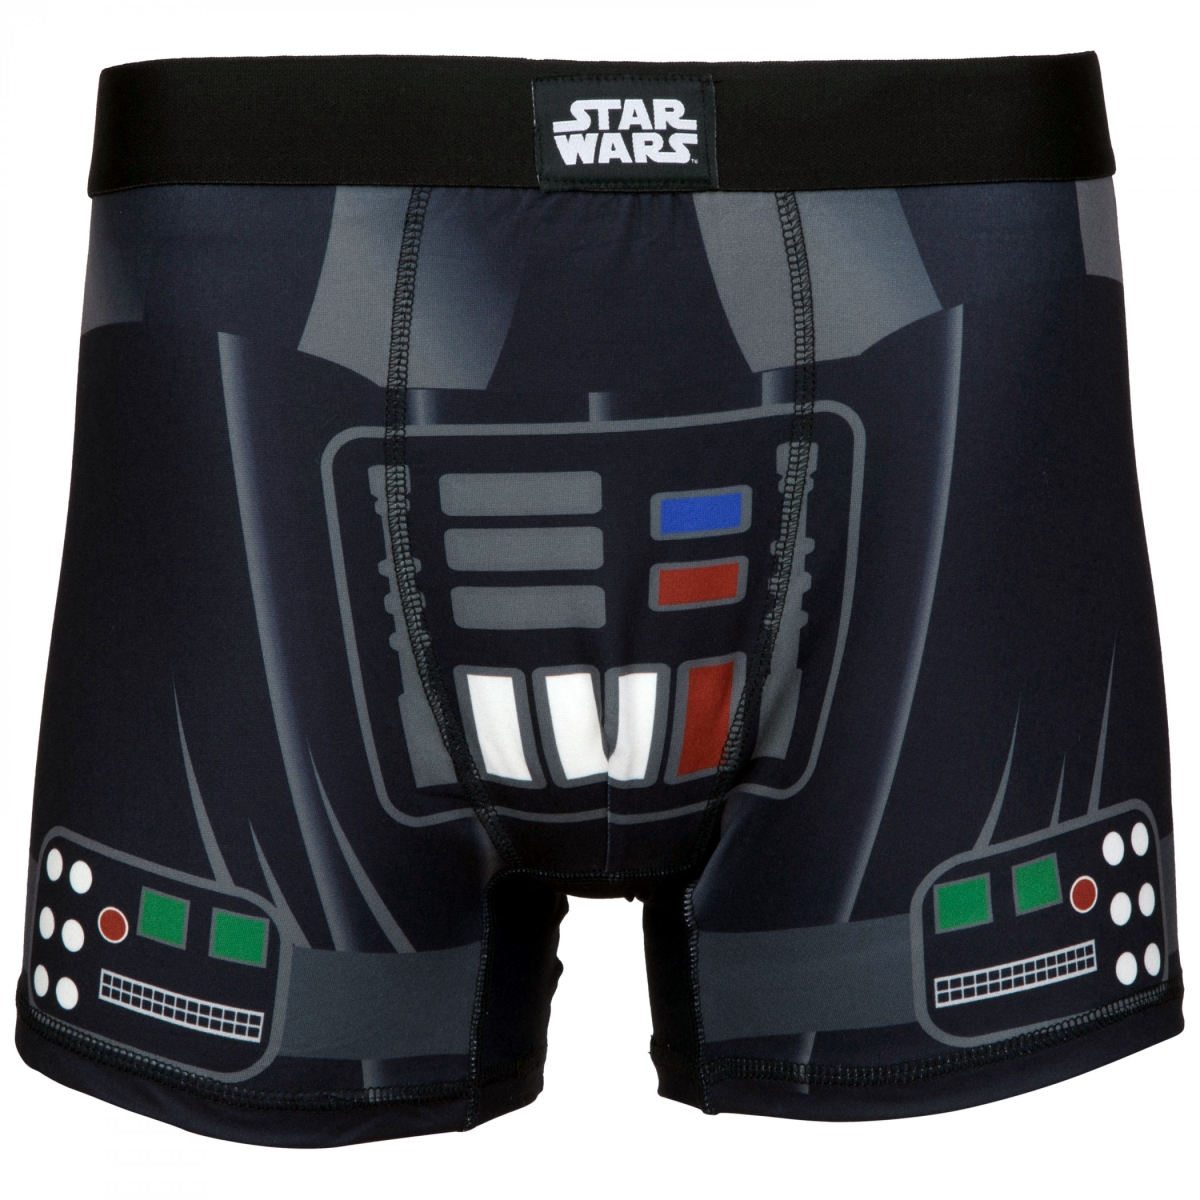 851928-ge-40-42  Darth Vader Cosplay Mens Underwear Boxer Briefs - Extra Large - 40-42 -  Star Wars, 851928-ge(40-42)